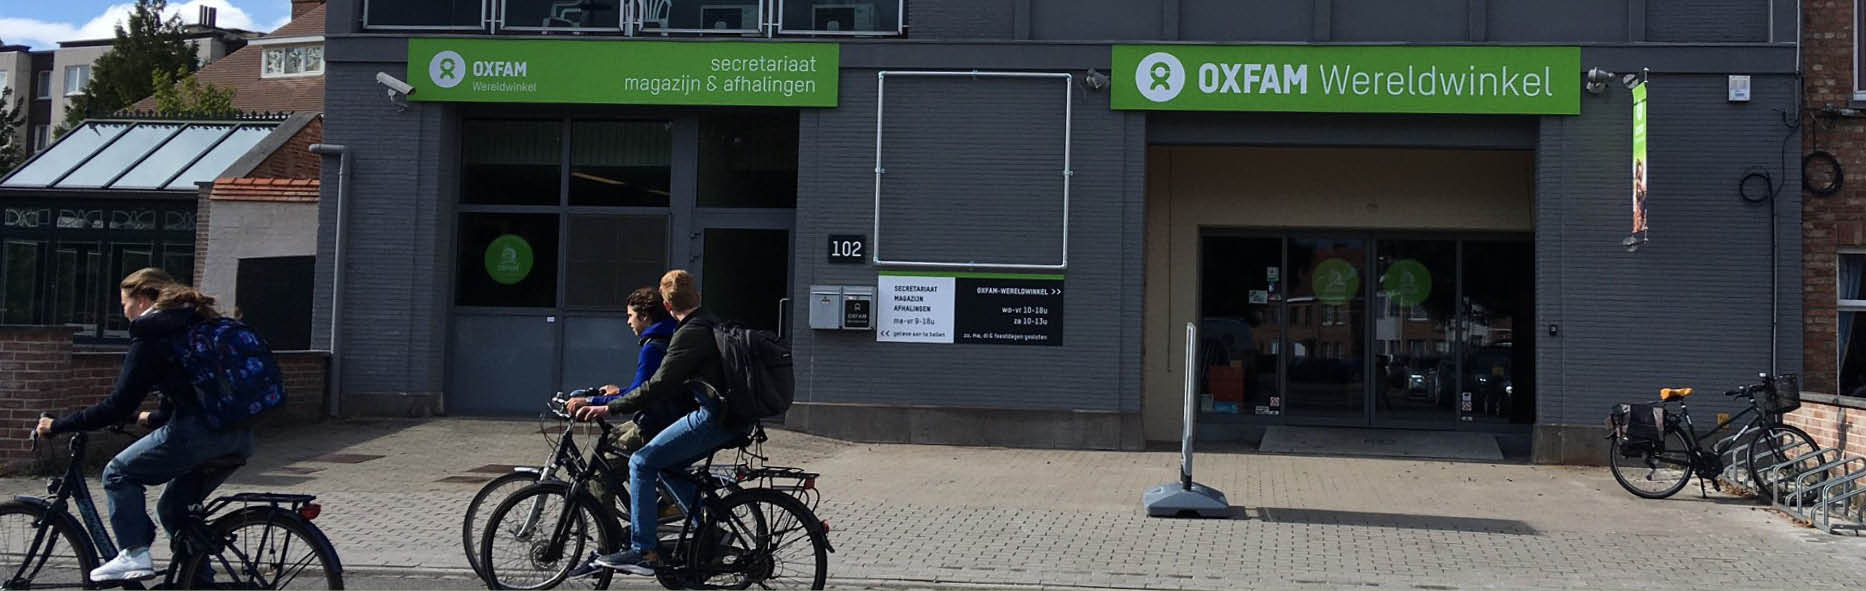 Gevel Oxfam Wereldwinkel Cash & Carry Sint-Andries